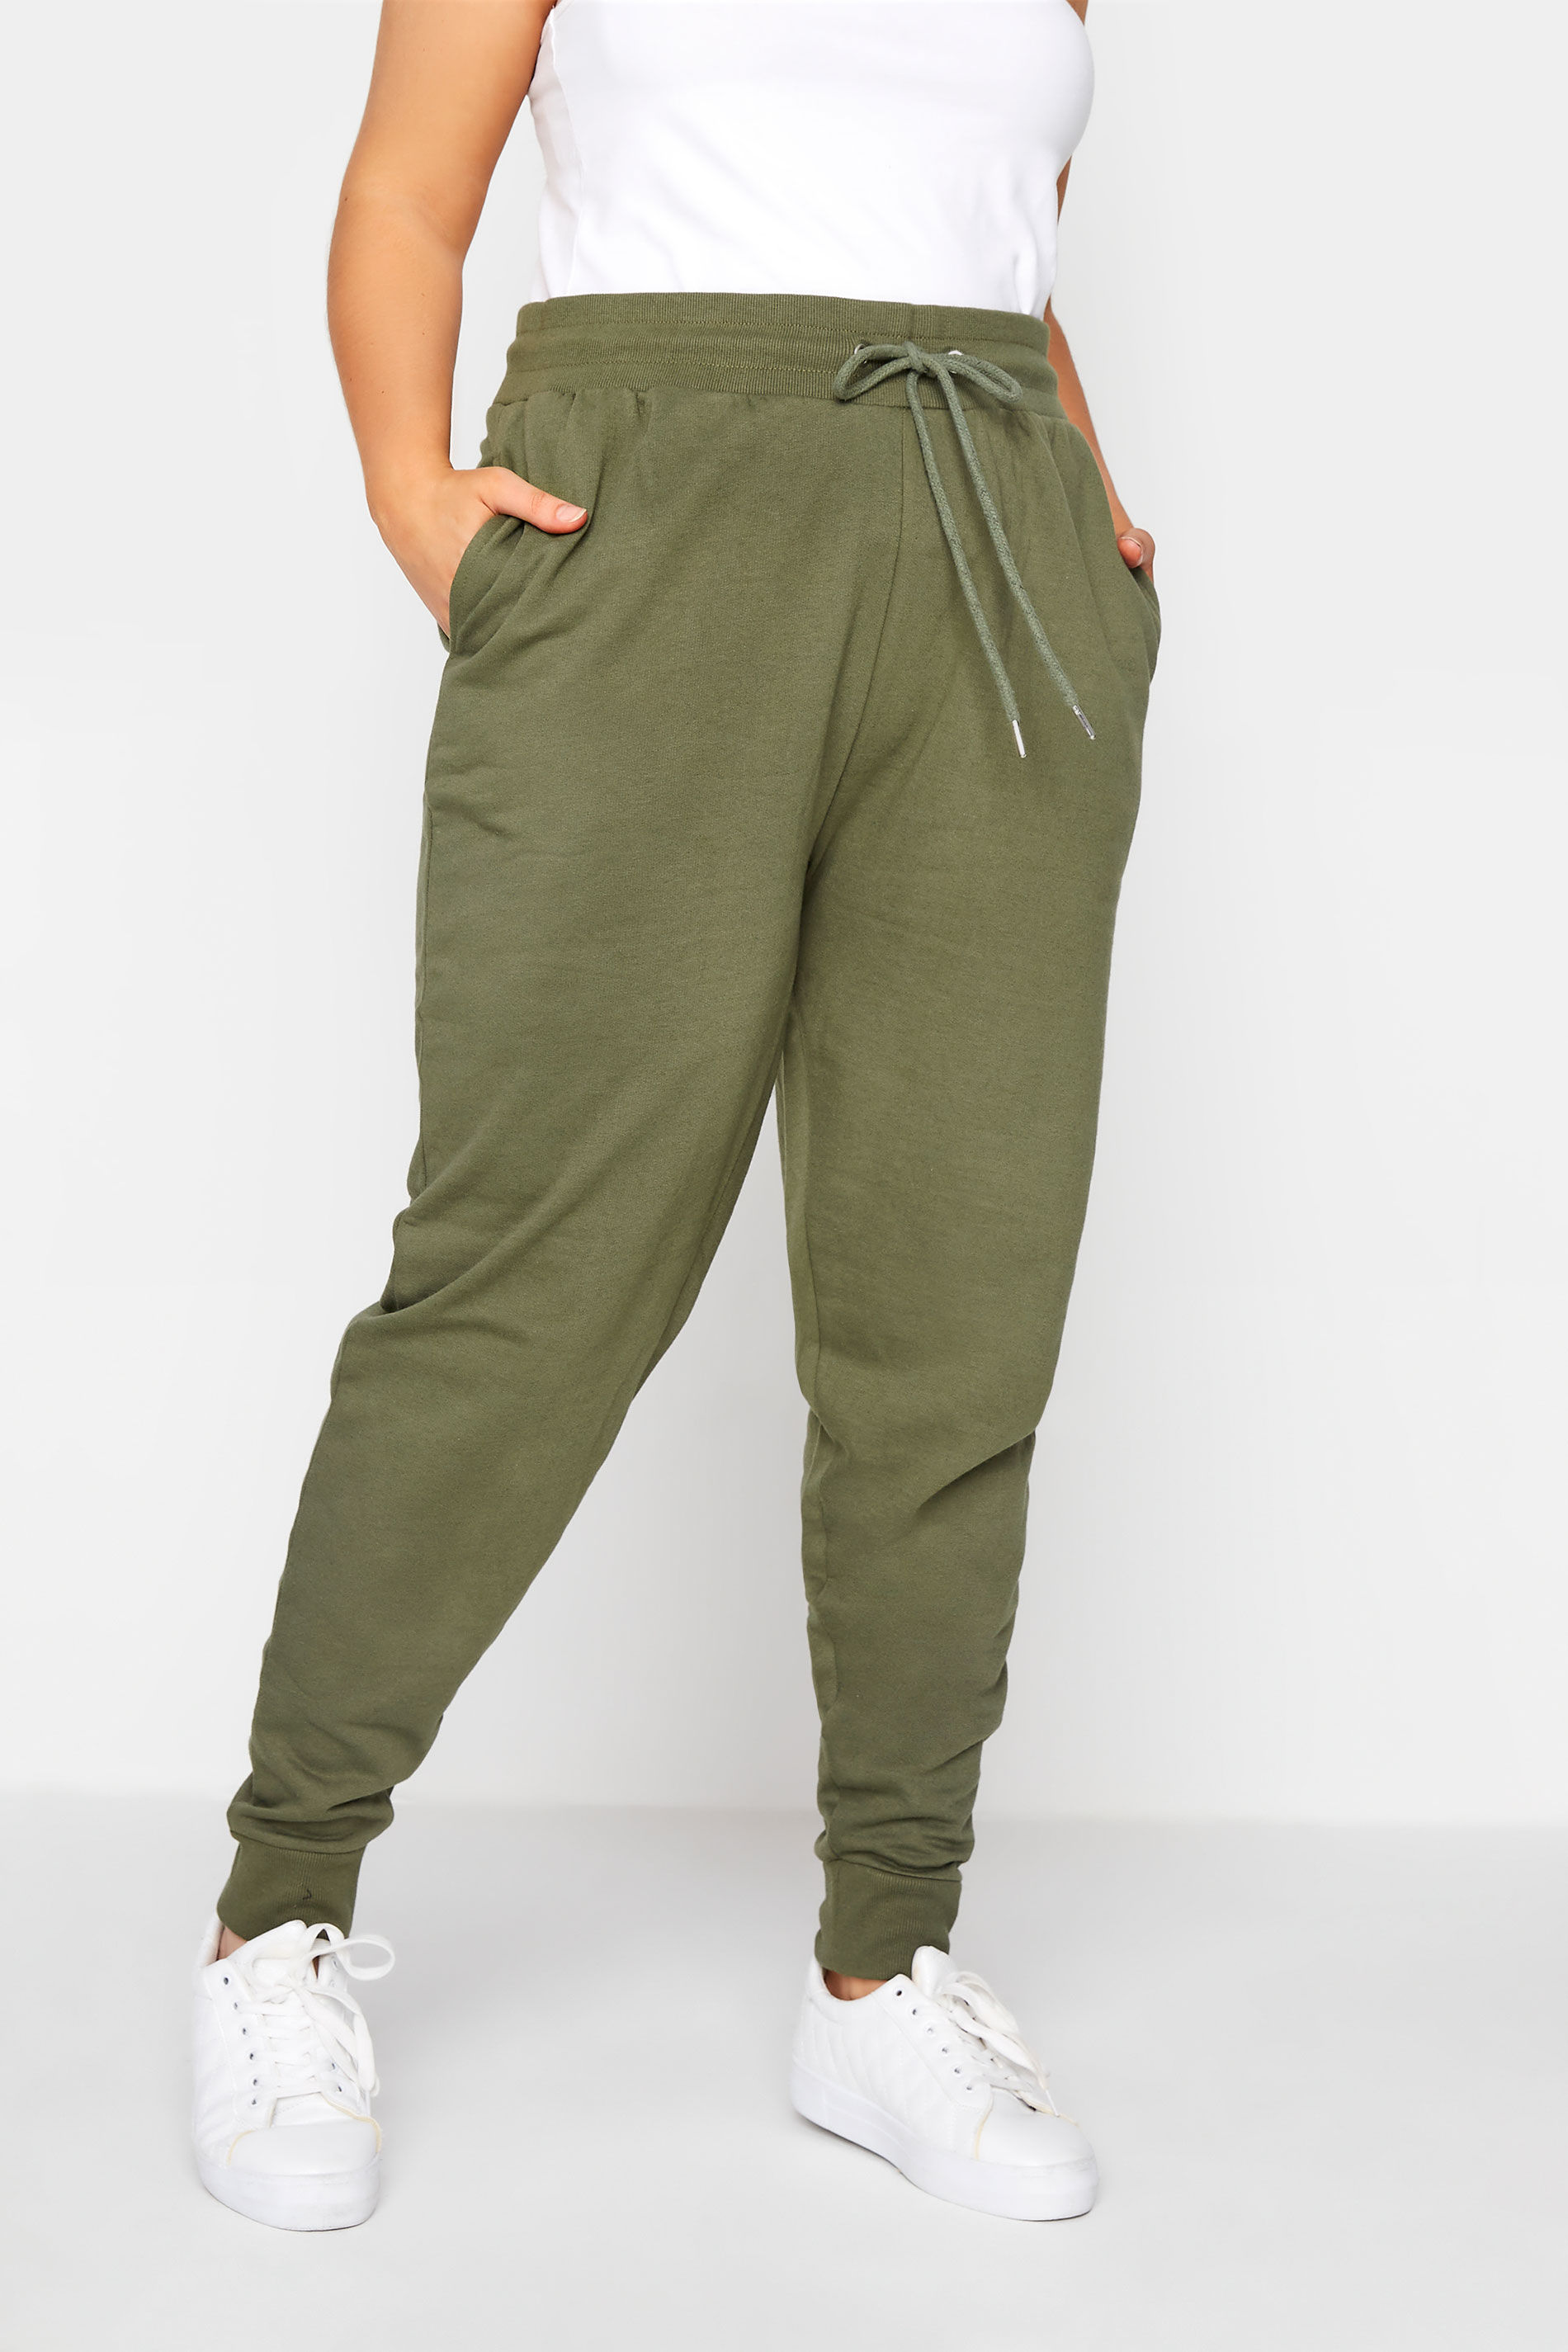 Plus Size Khaki Green Basic Cuff Joggers | Yours Clothing 1